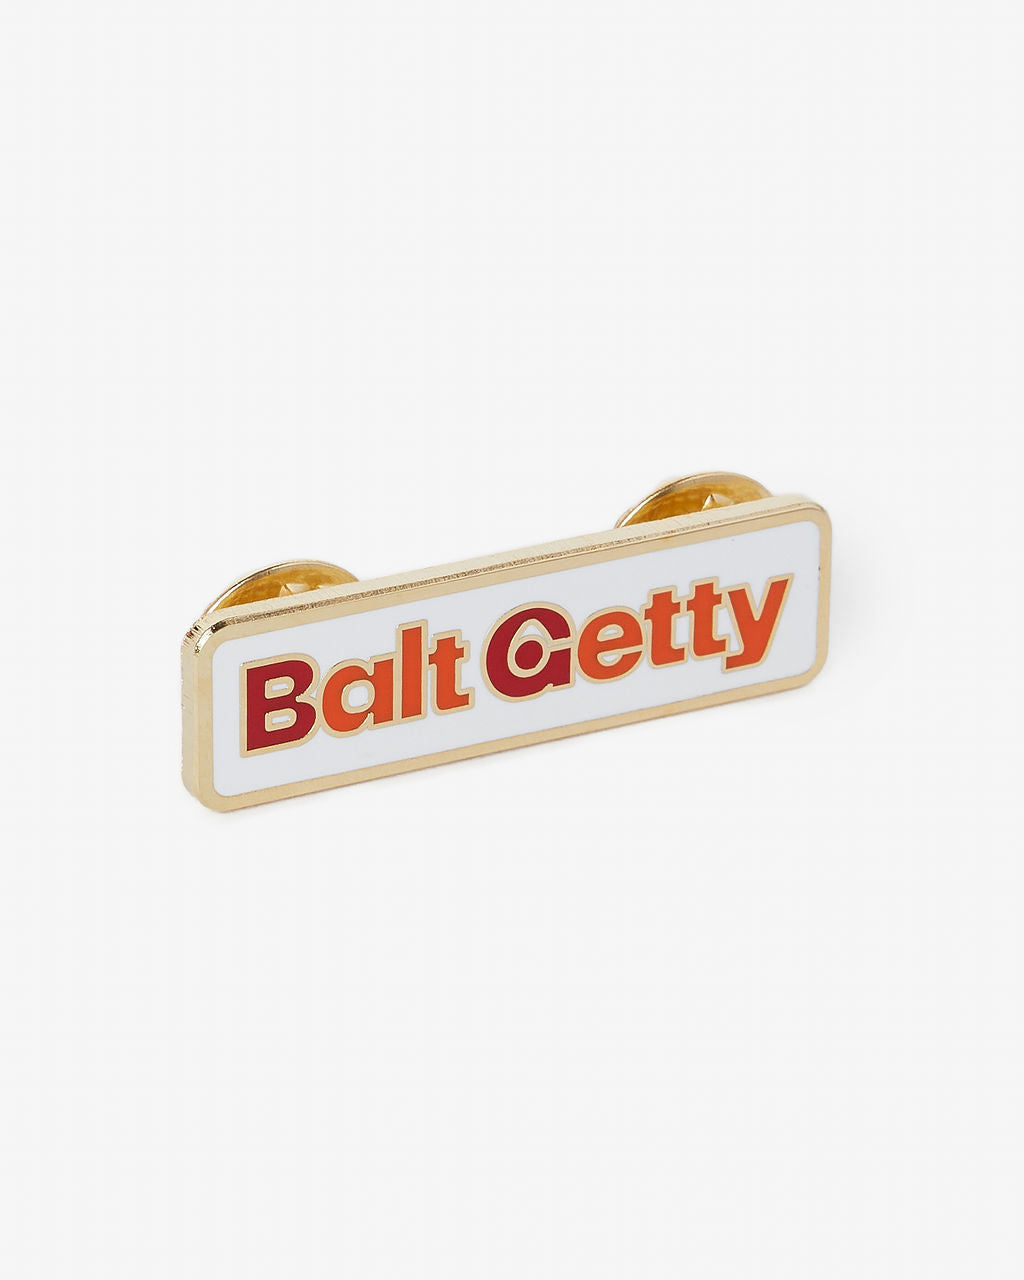 Balt Getty Pin